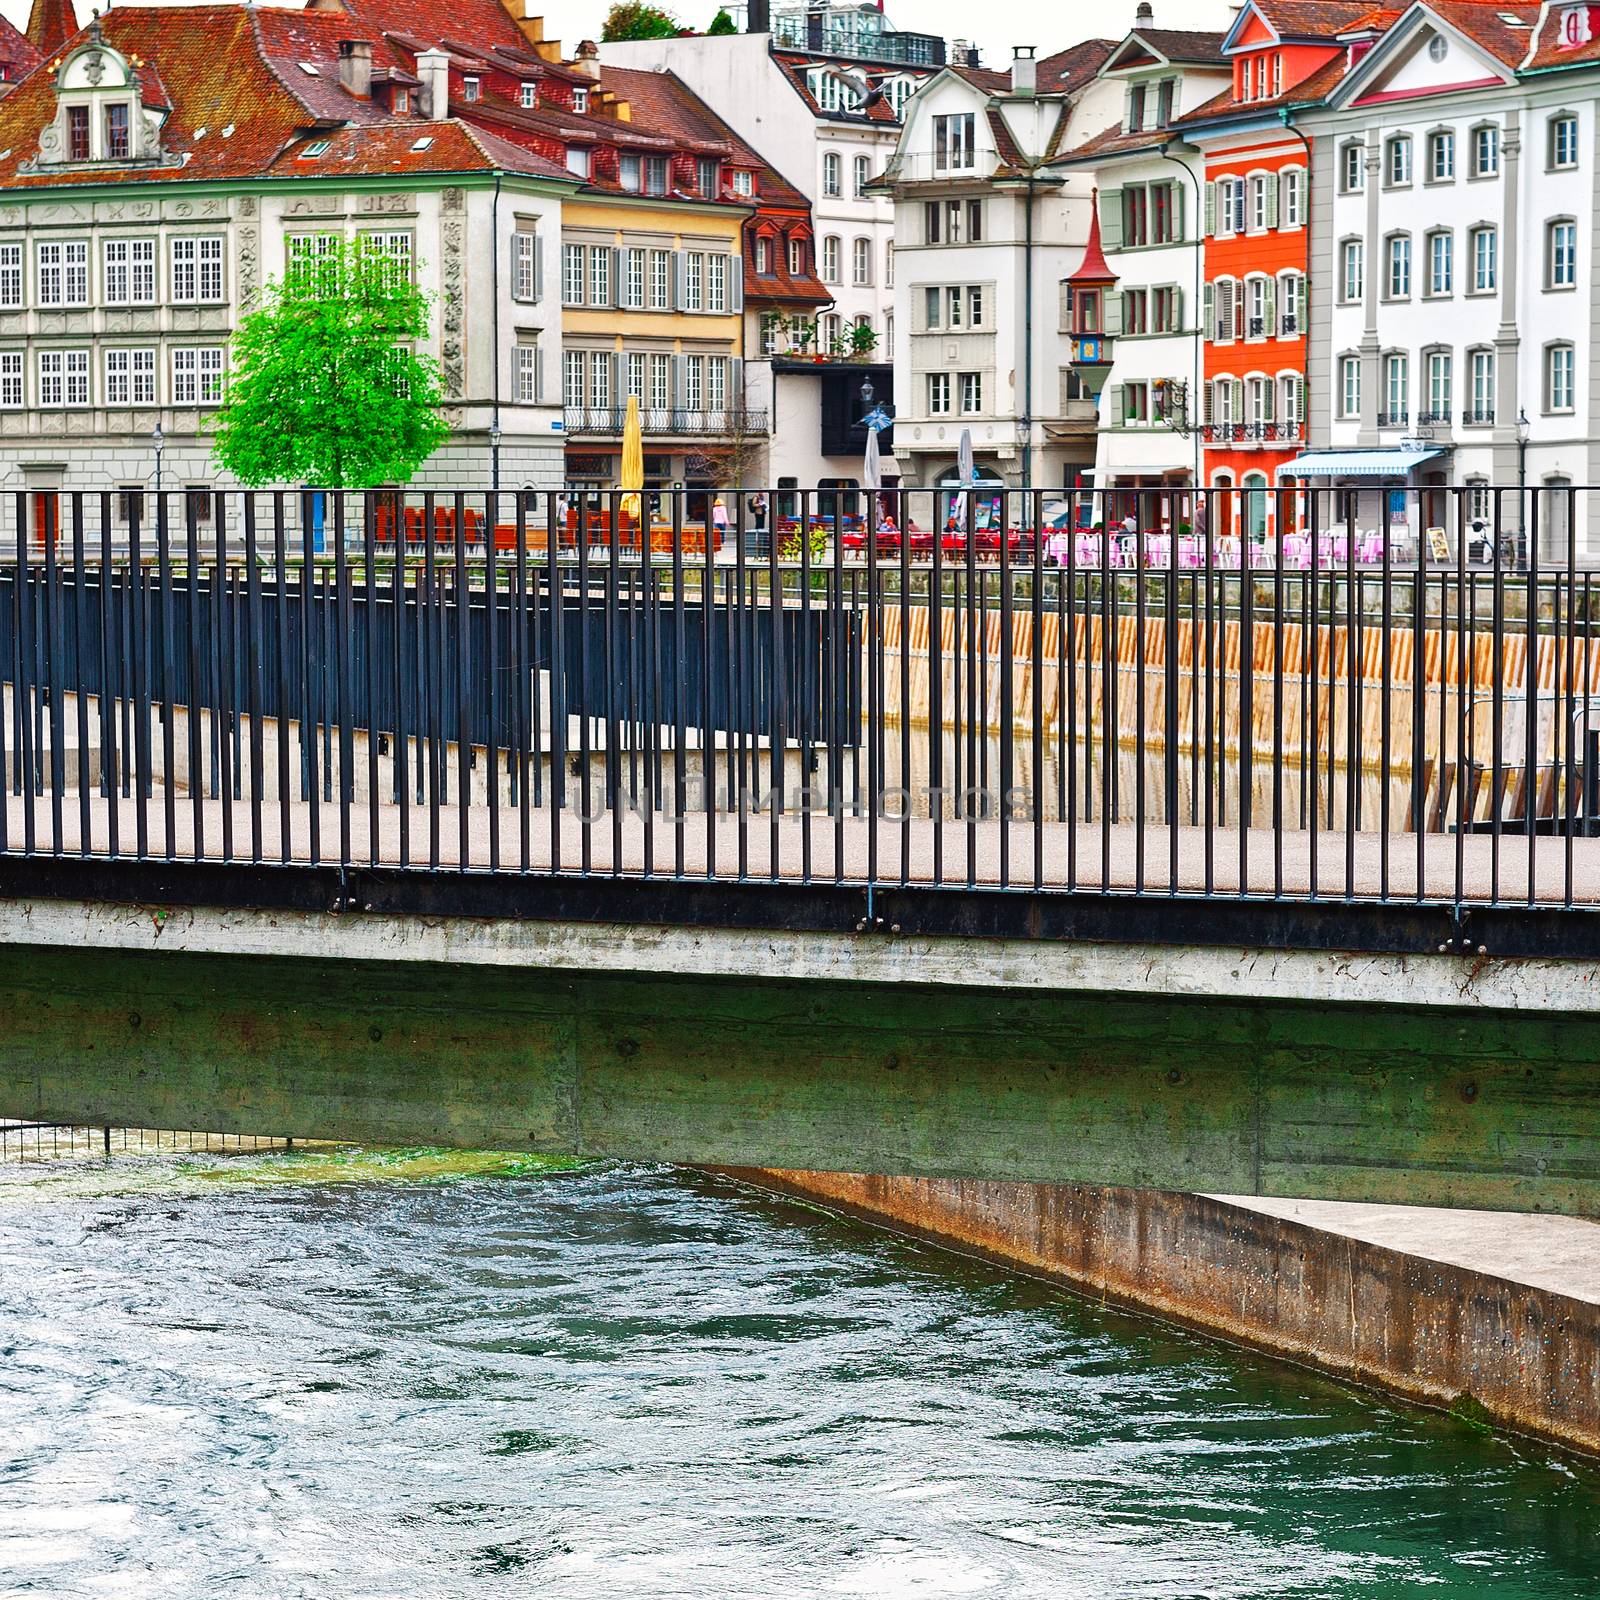  Bridge over the River Reuss in the City of Lucerne, Switzerland